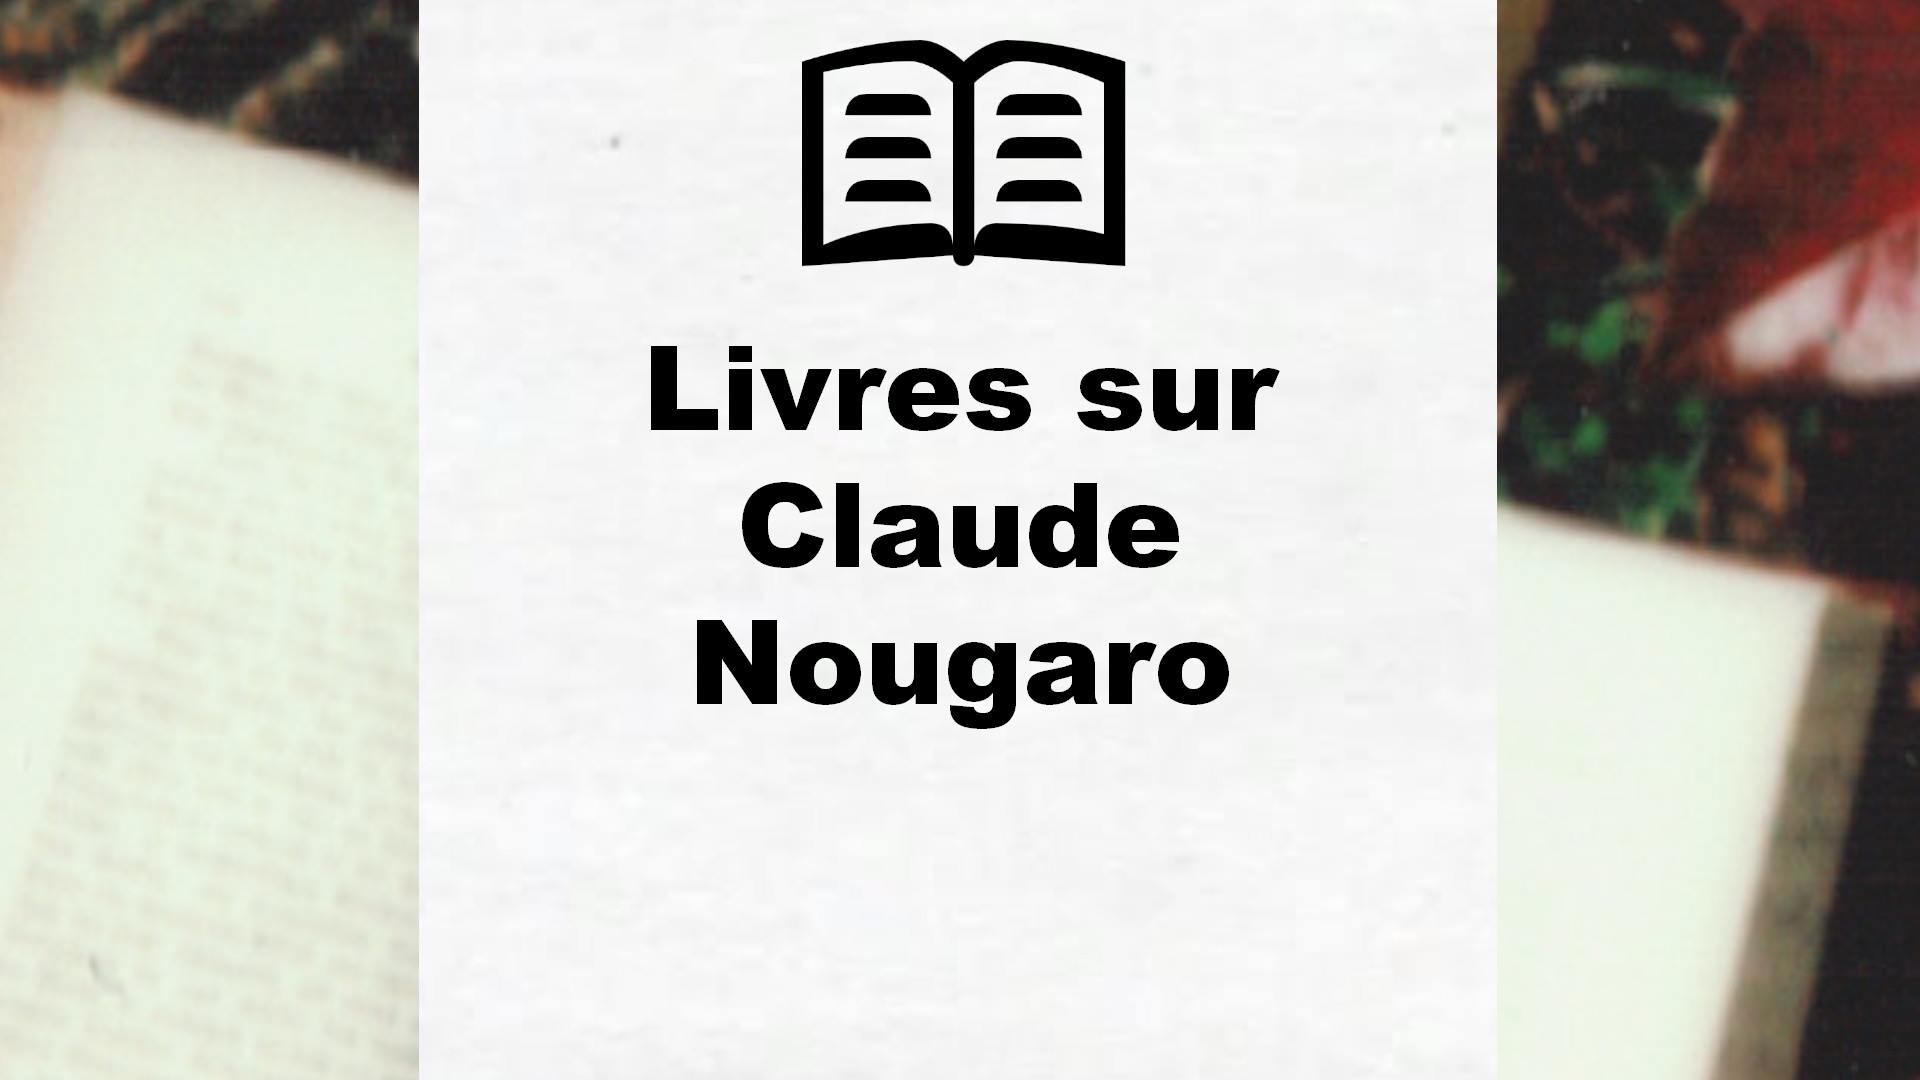 Livres sur Claude Nougaro